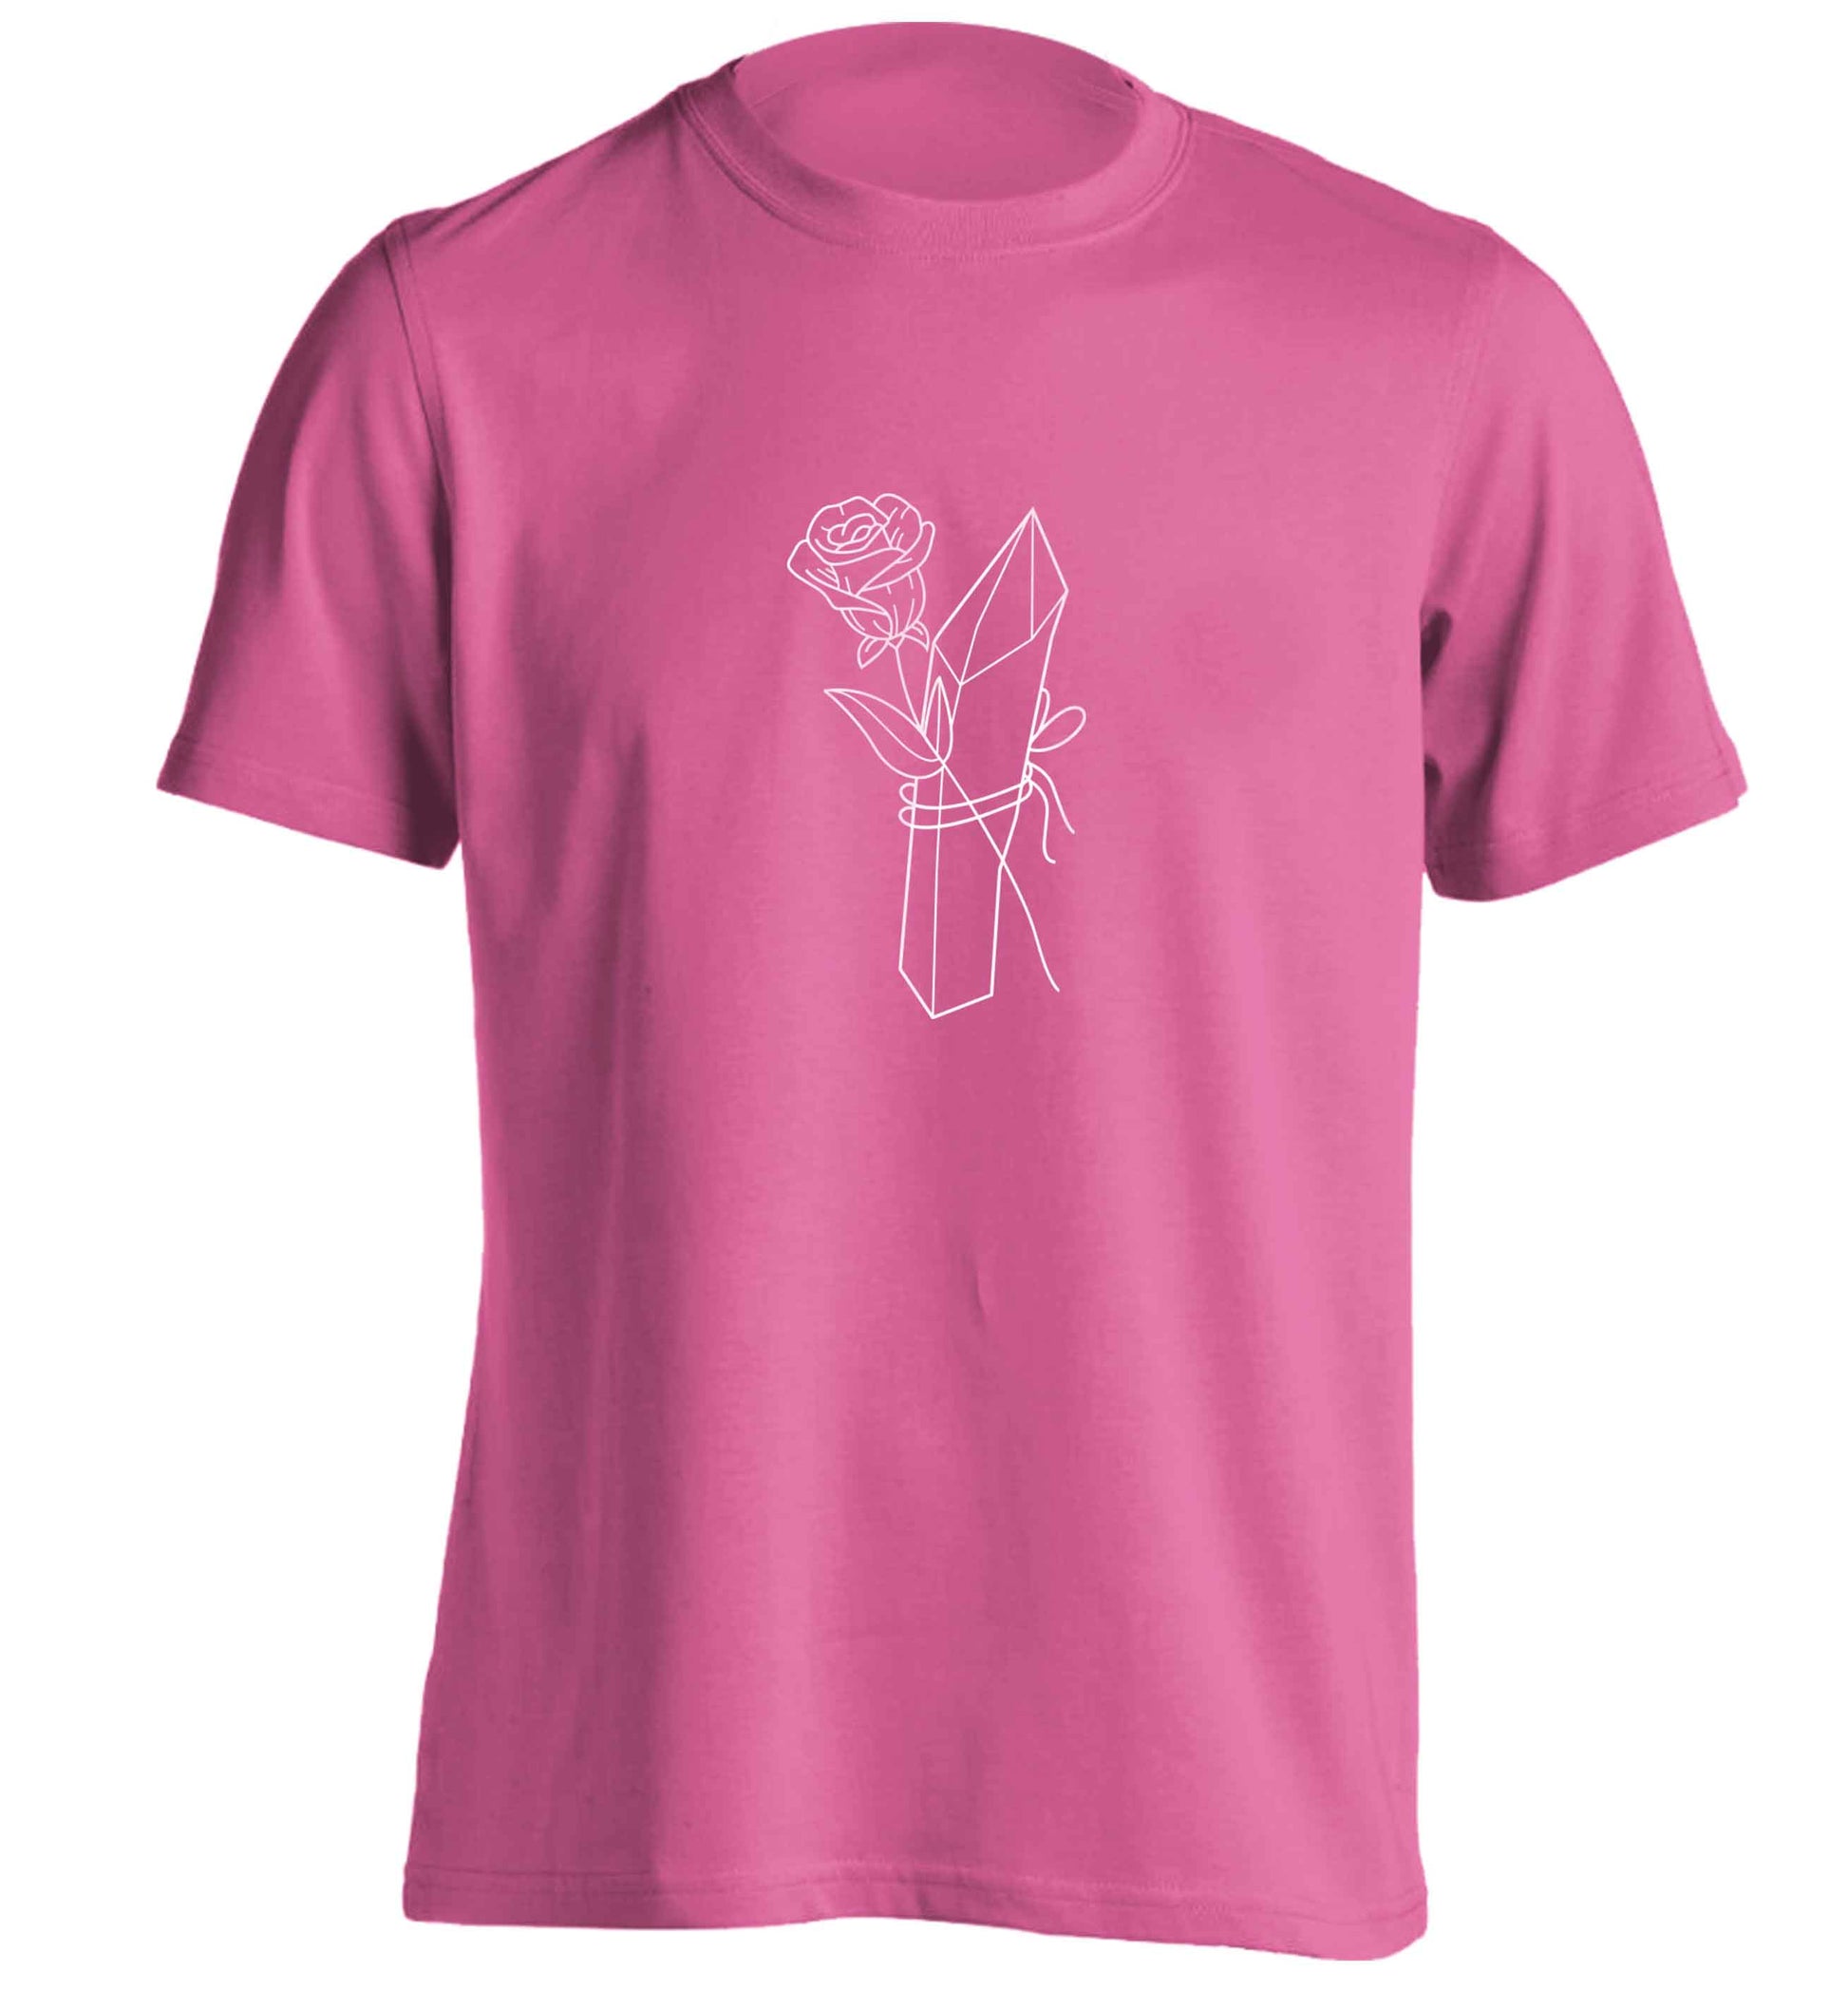 Rose crystal adults unisex pink Tshirt 2XL